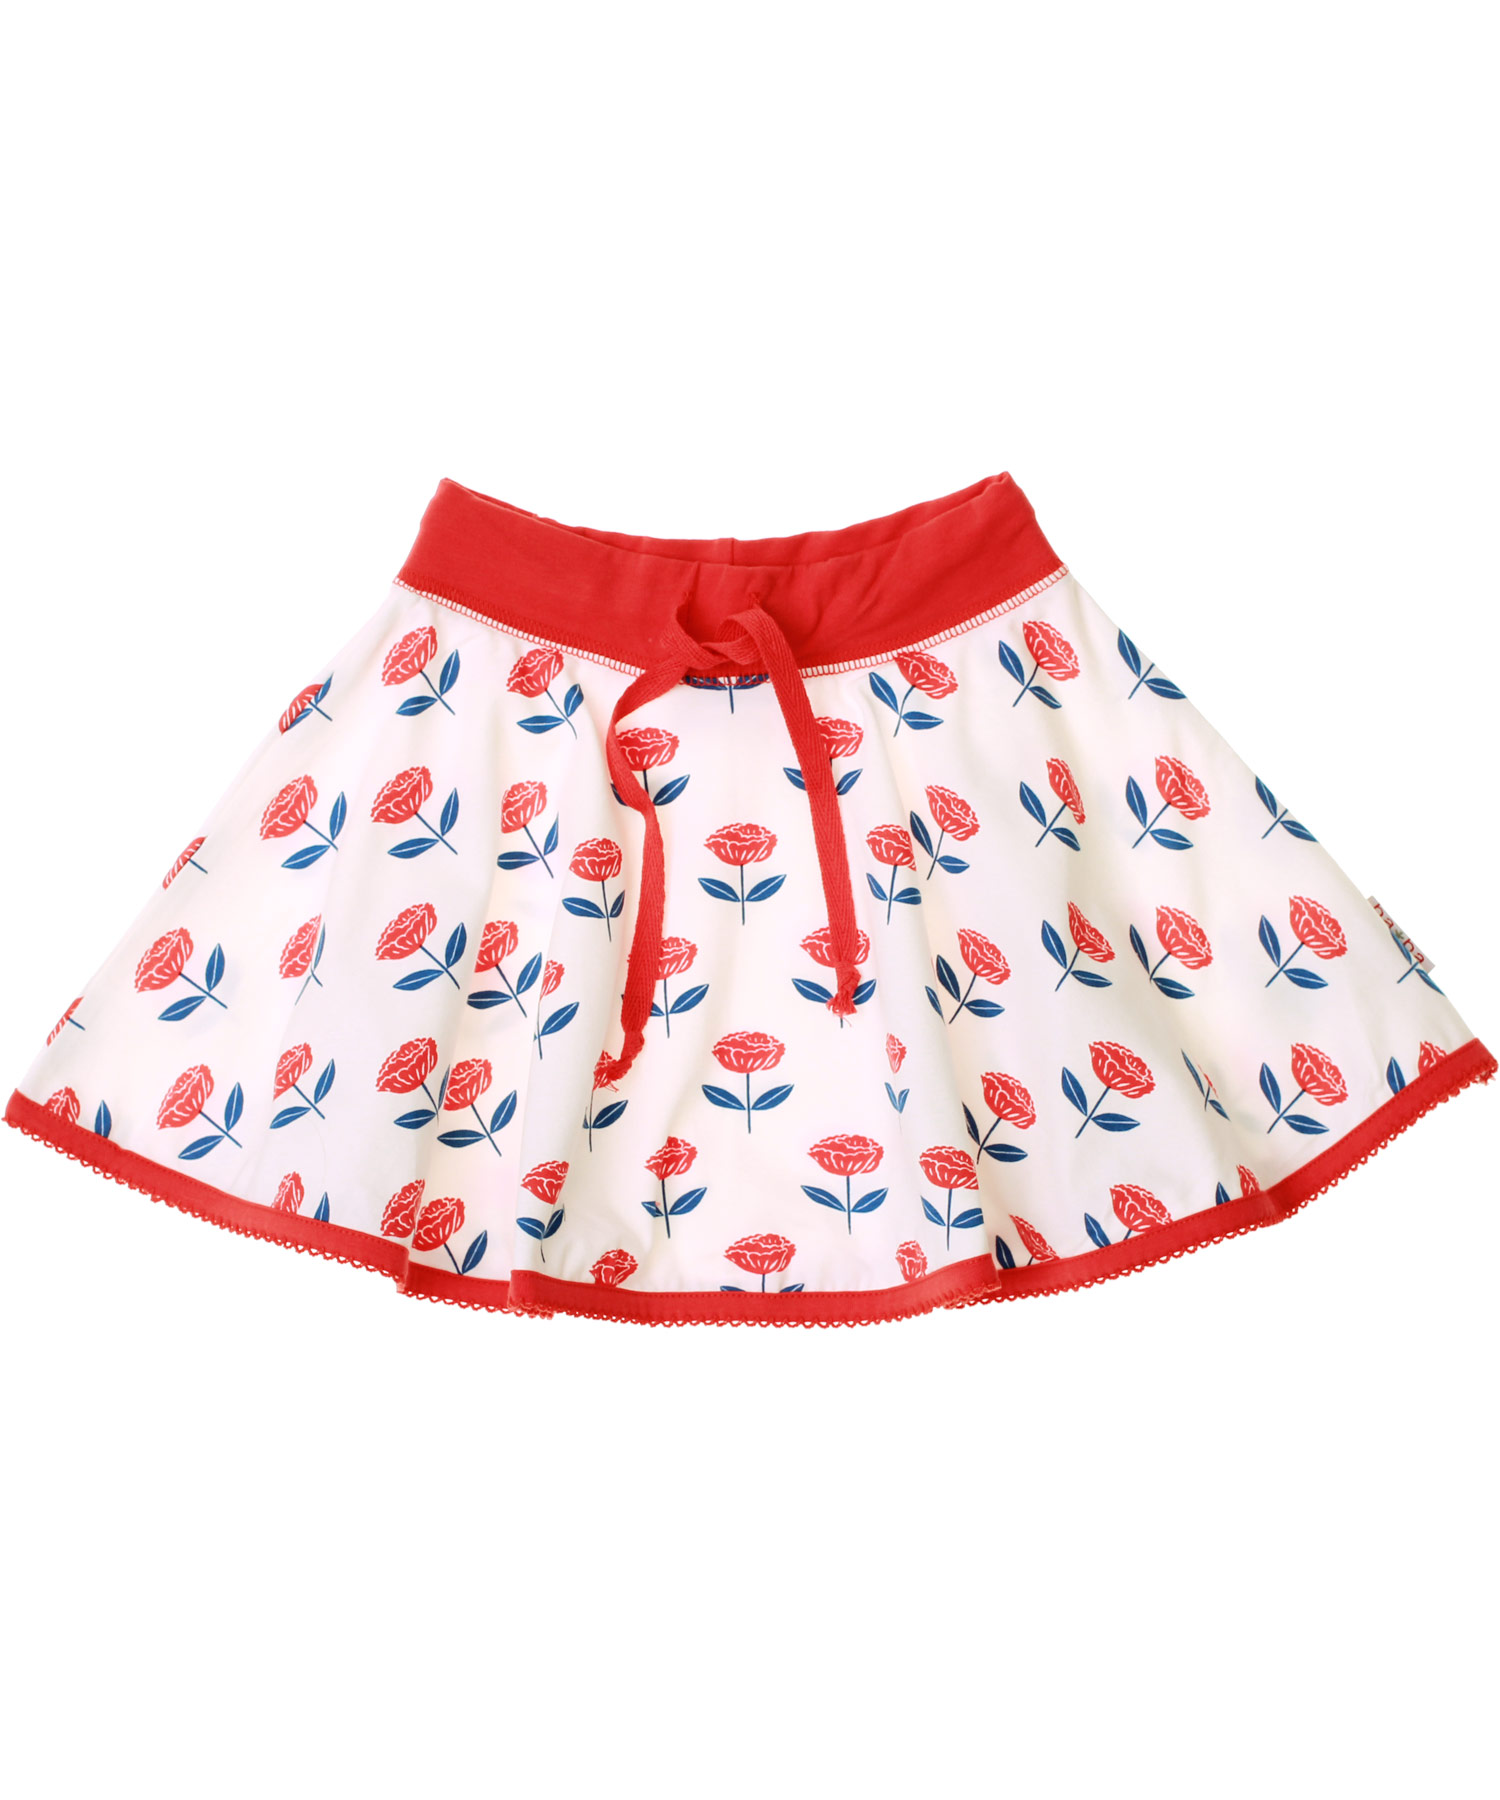 New! Baba Babywear cute rose printed skirt (Full circle skirt)